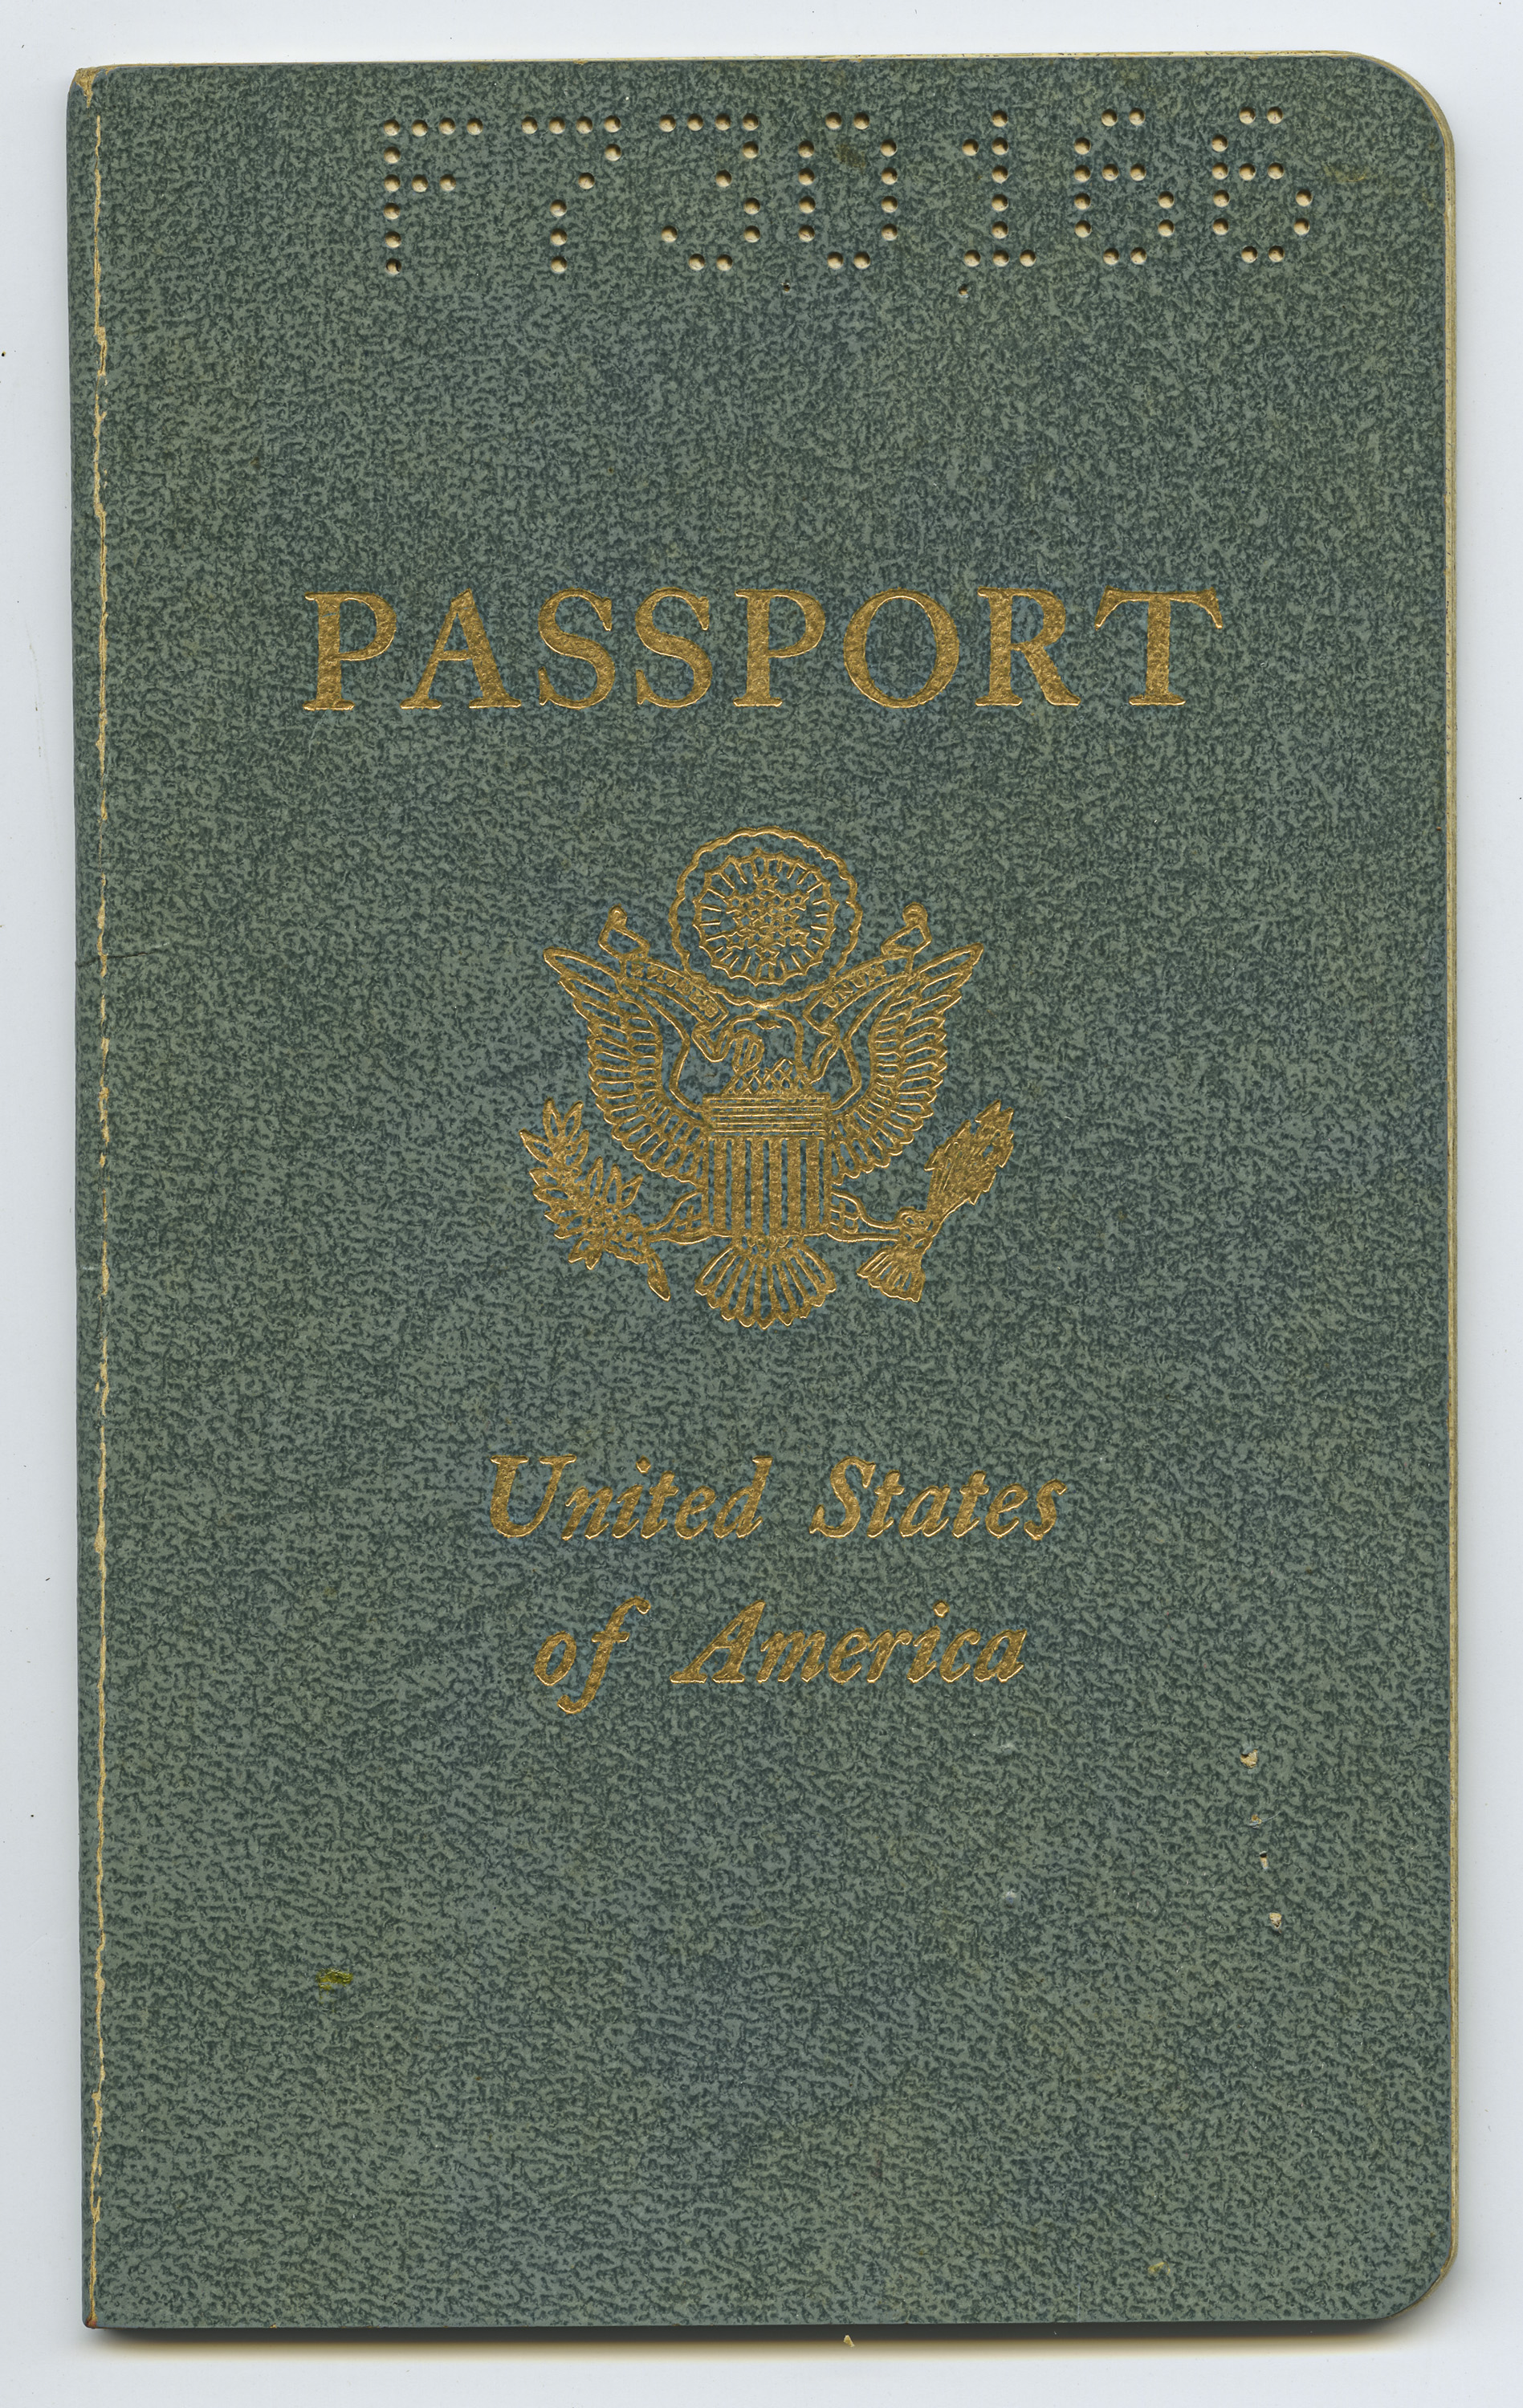 1960s US Passport Cover.